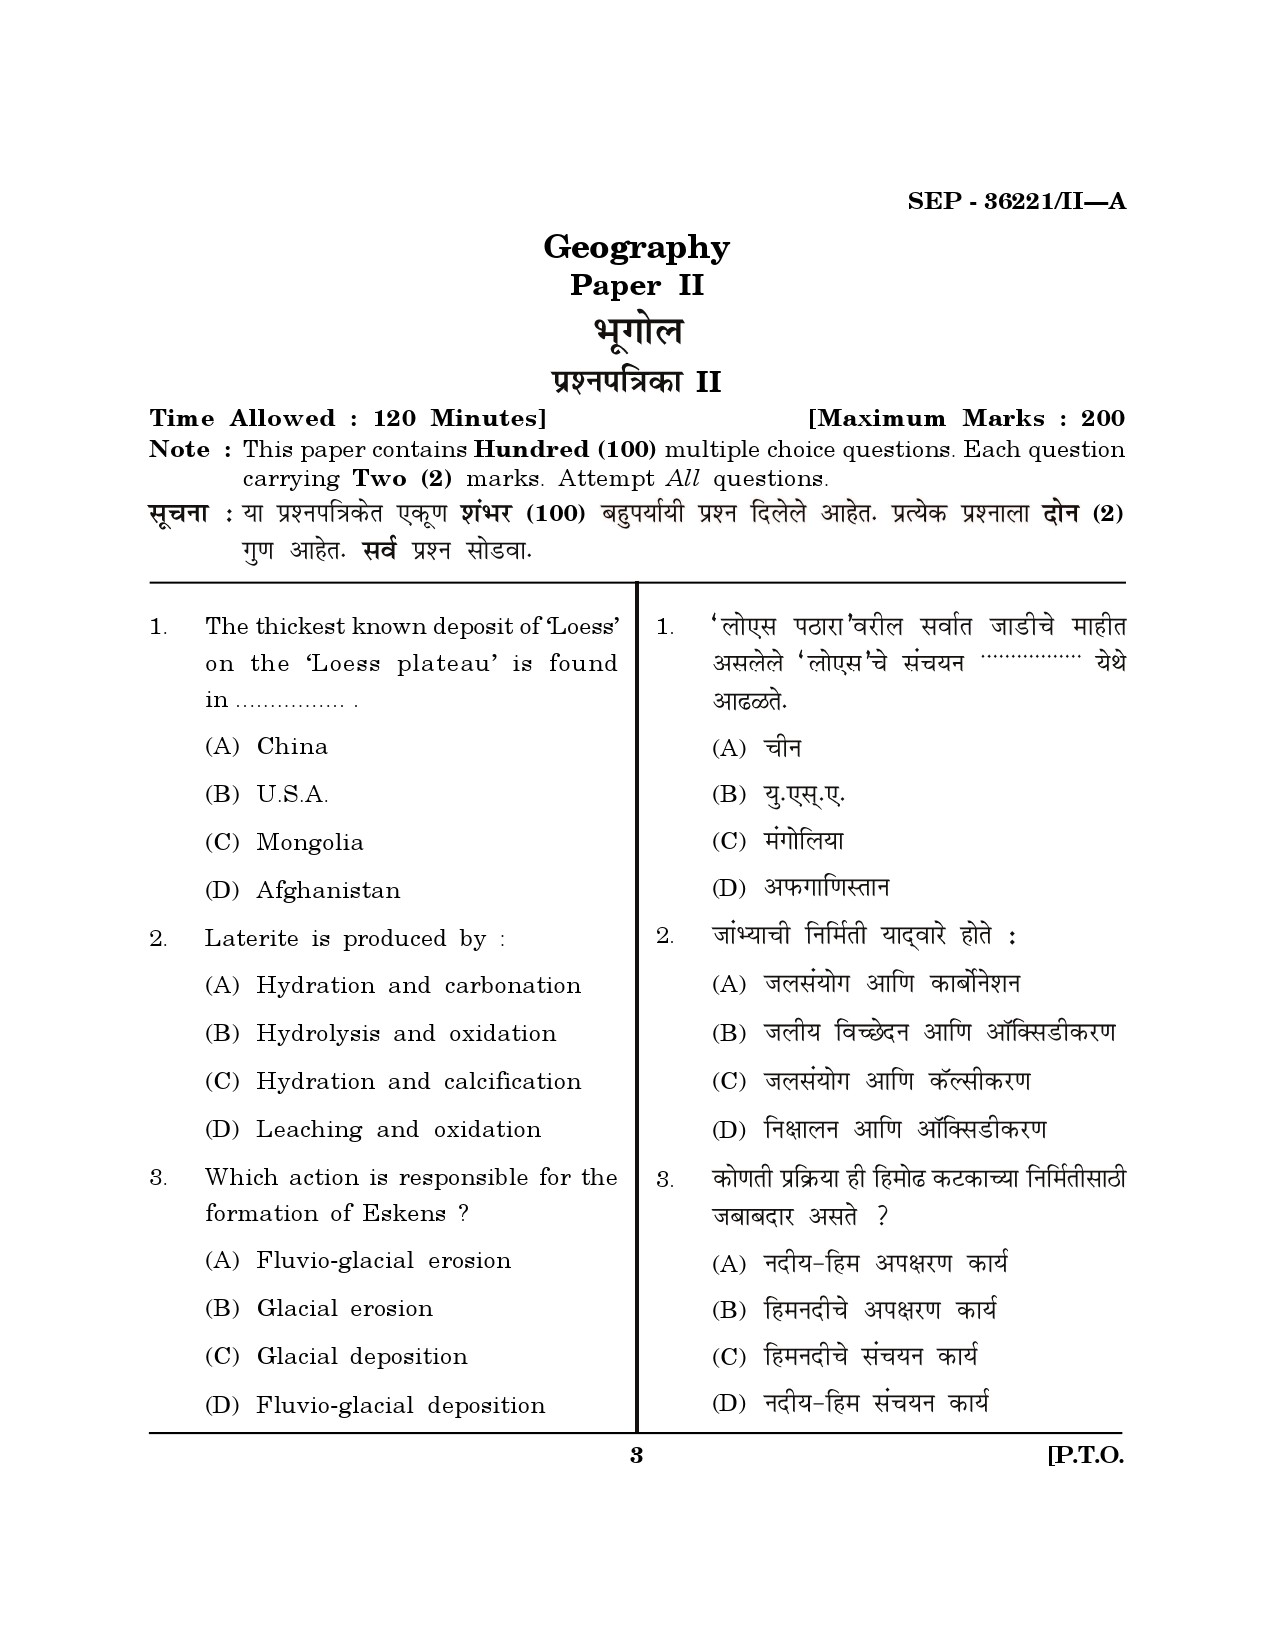 Maharashtra SET Geography Exam Question Paper September 2021 2